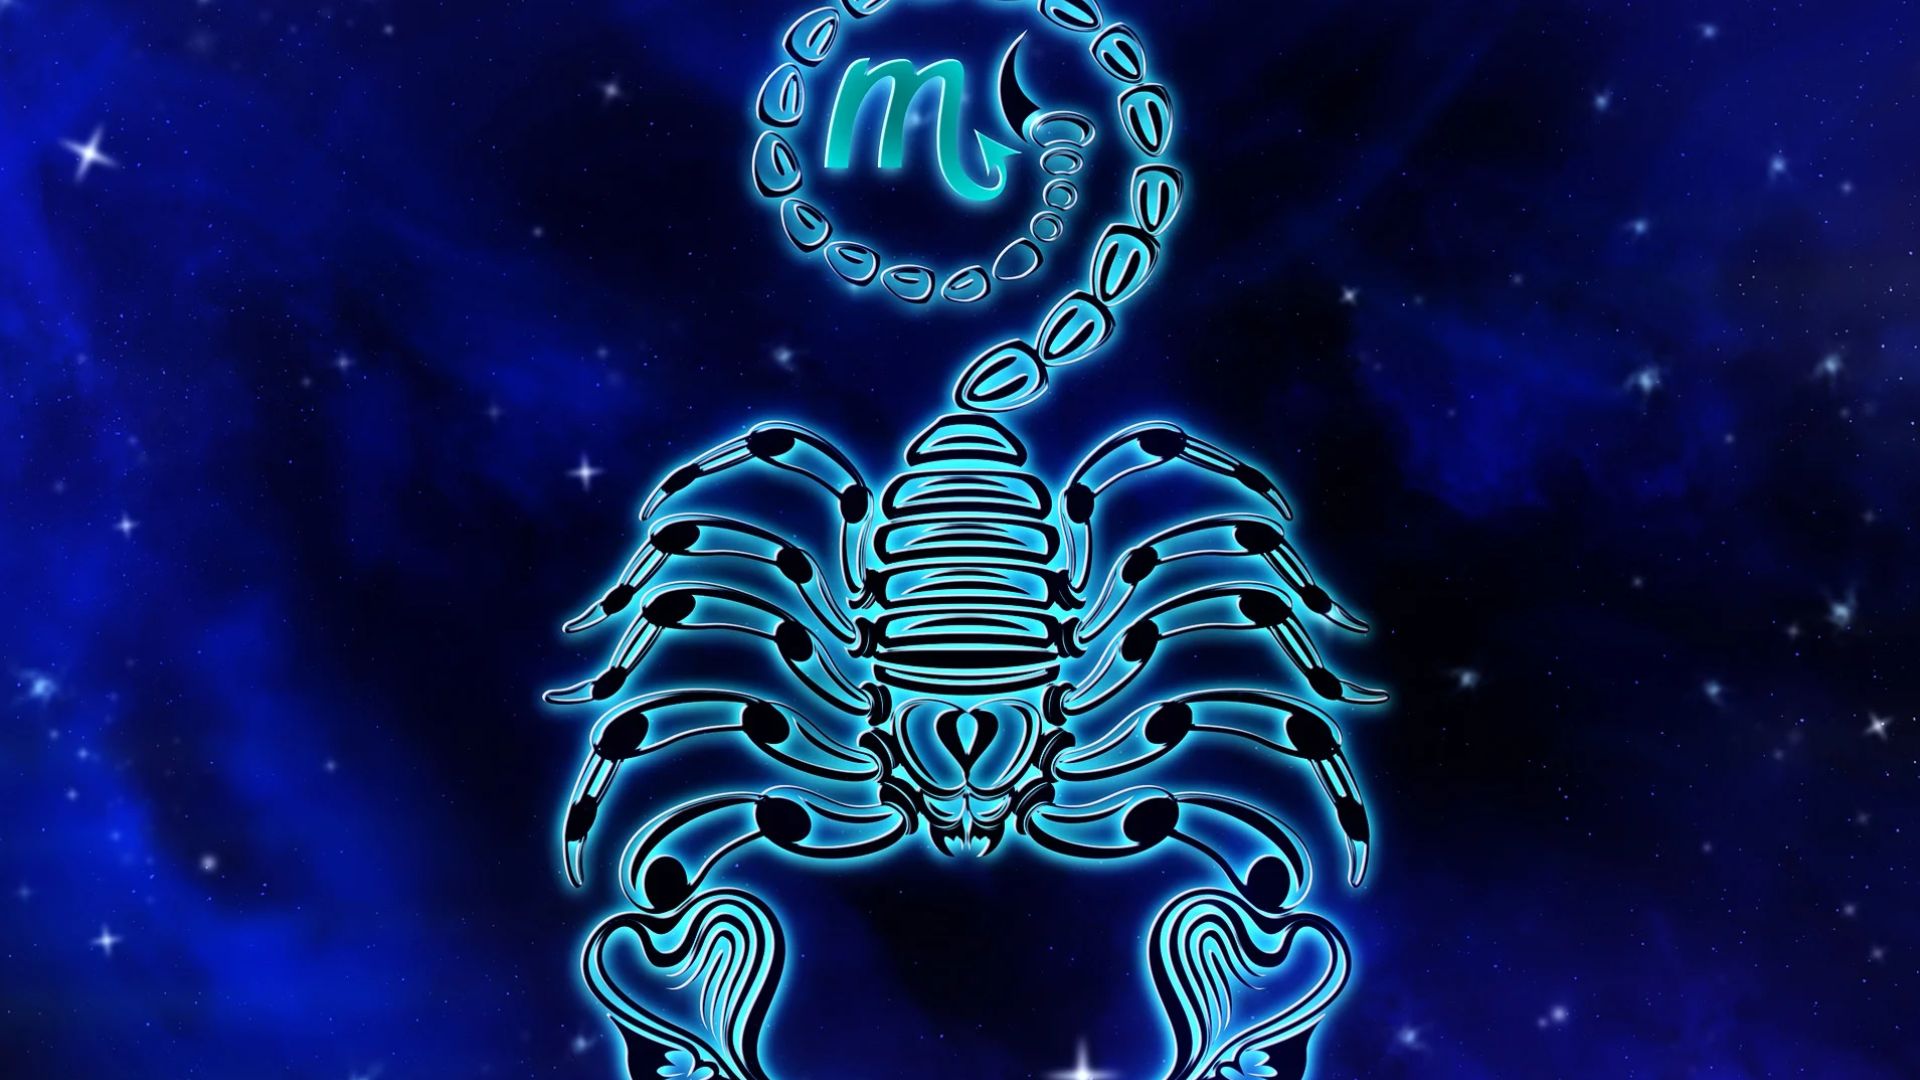 Blue Colored Zodiac Sign